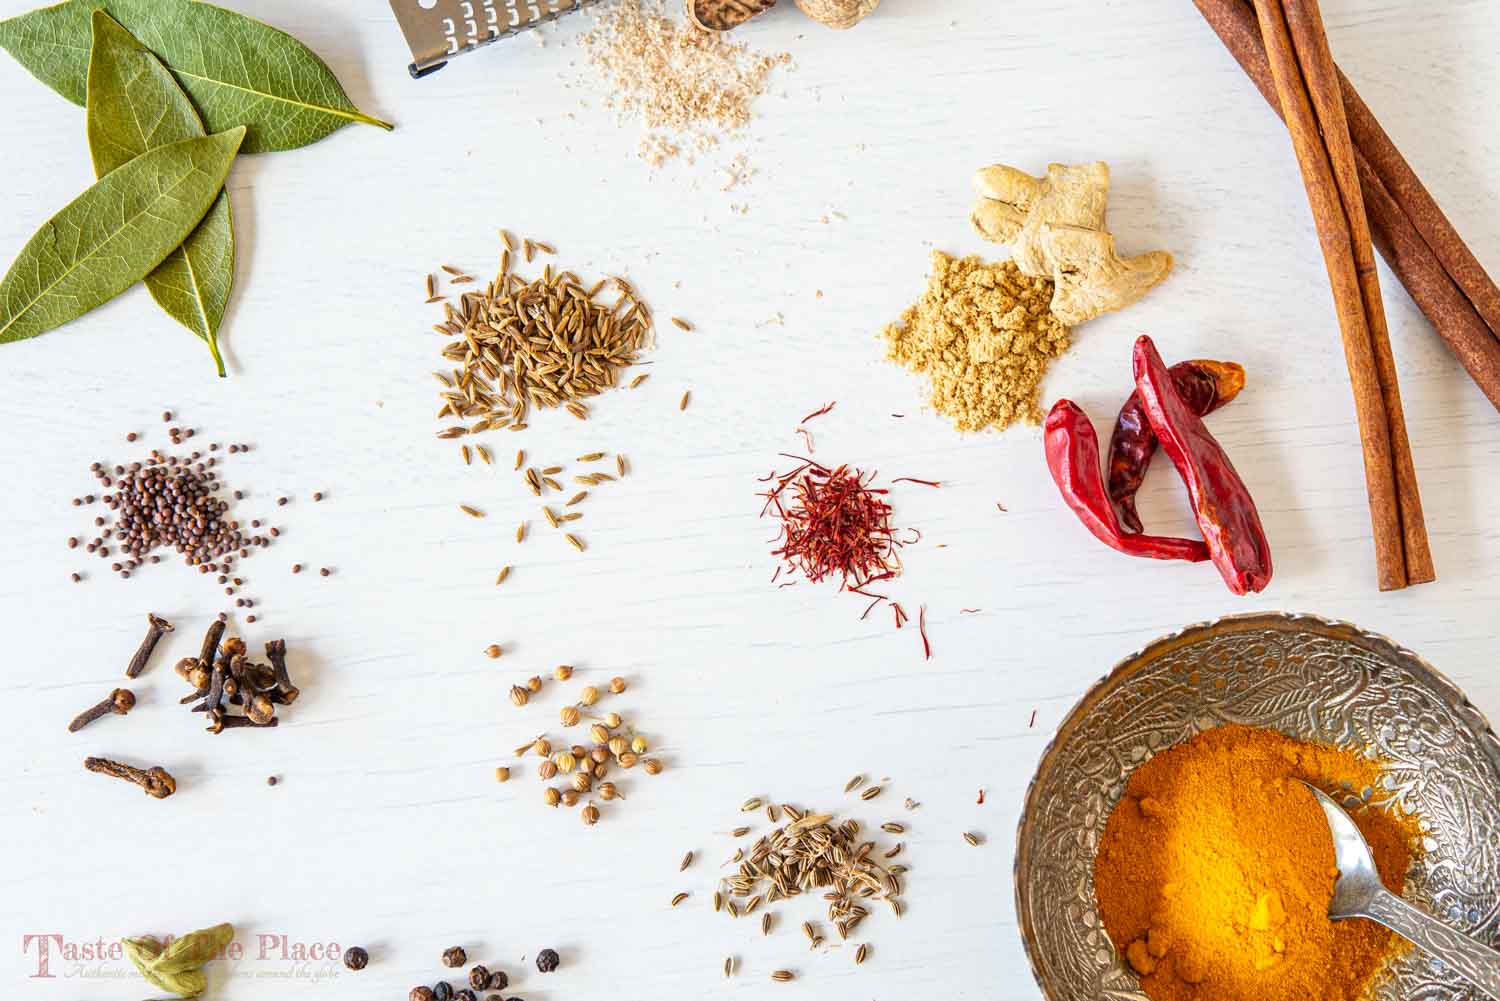 https://tasteoftheplace.com/wp-content/uploads/2023/06/Common-Indian-spices-at-TasteOfThePlace.com-with-watermark-11.jpg?ezimgfmt=ngcb1/notWebP